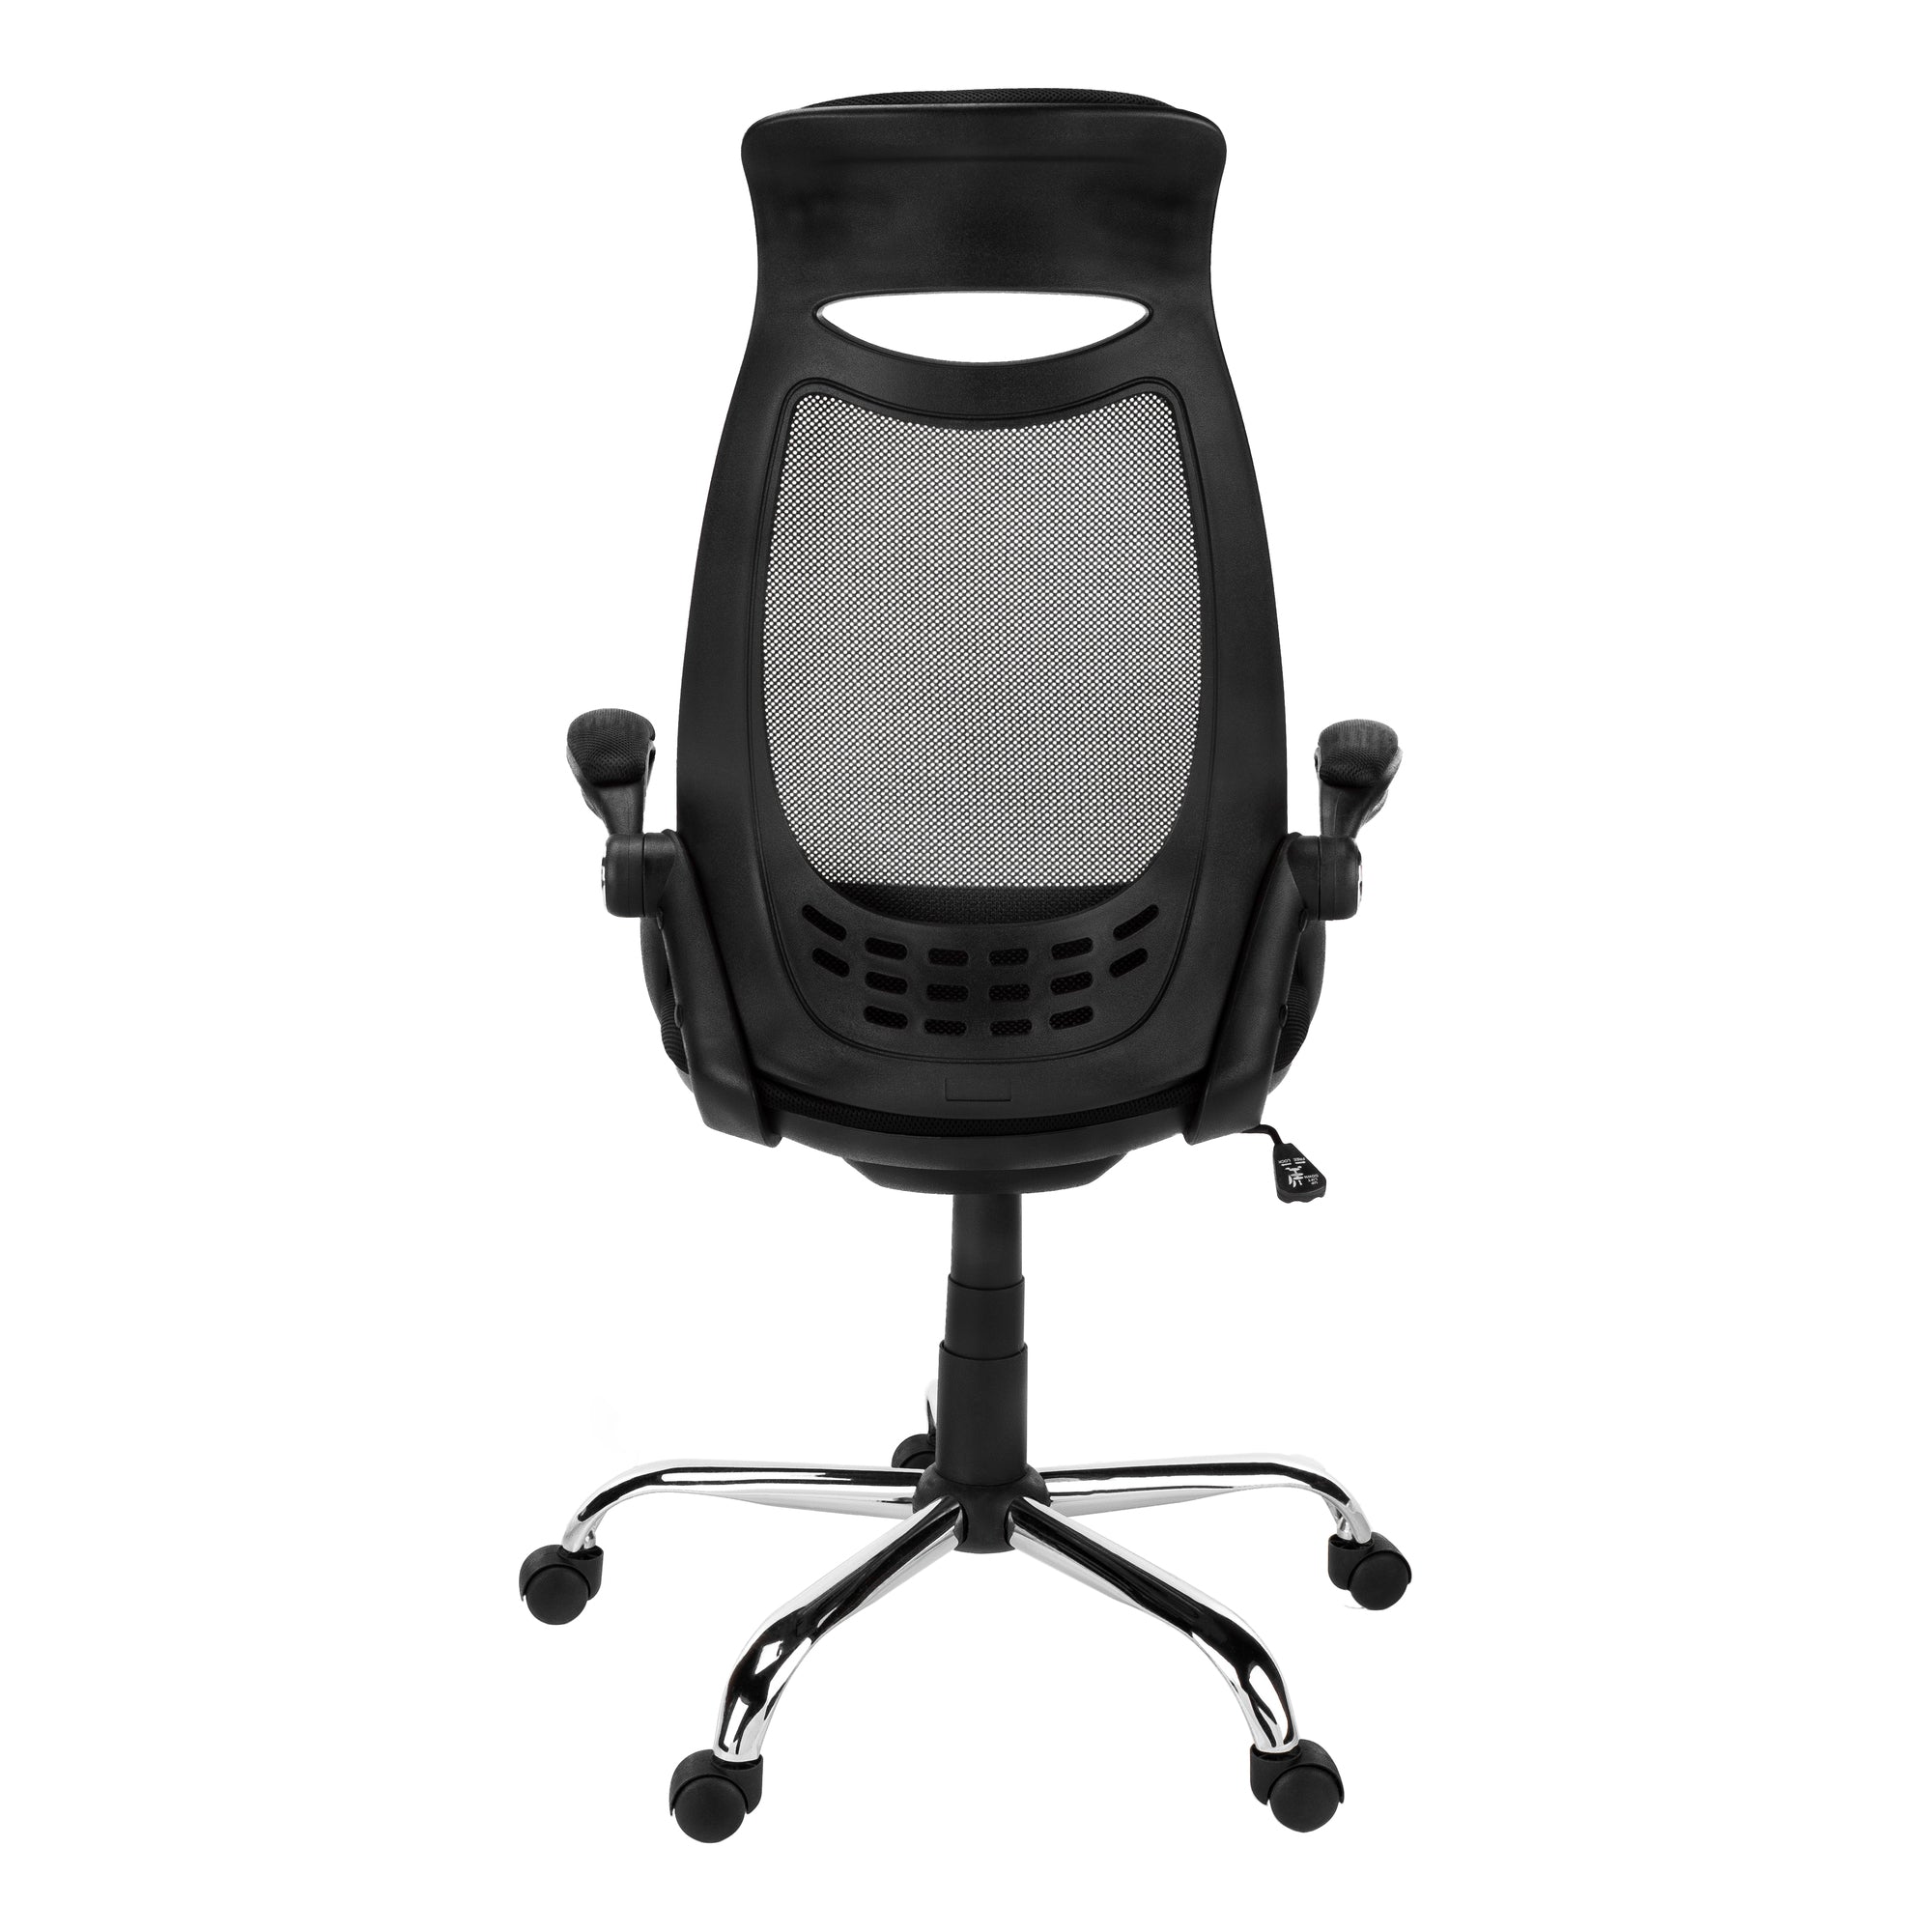 MN-807268    Office Chair, Adjustable Height, Swivel, Ergonomic, Armrests, Computer Desk, Office, Metal Base, Mesh, Black, Chrome, Contemporary, Modern